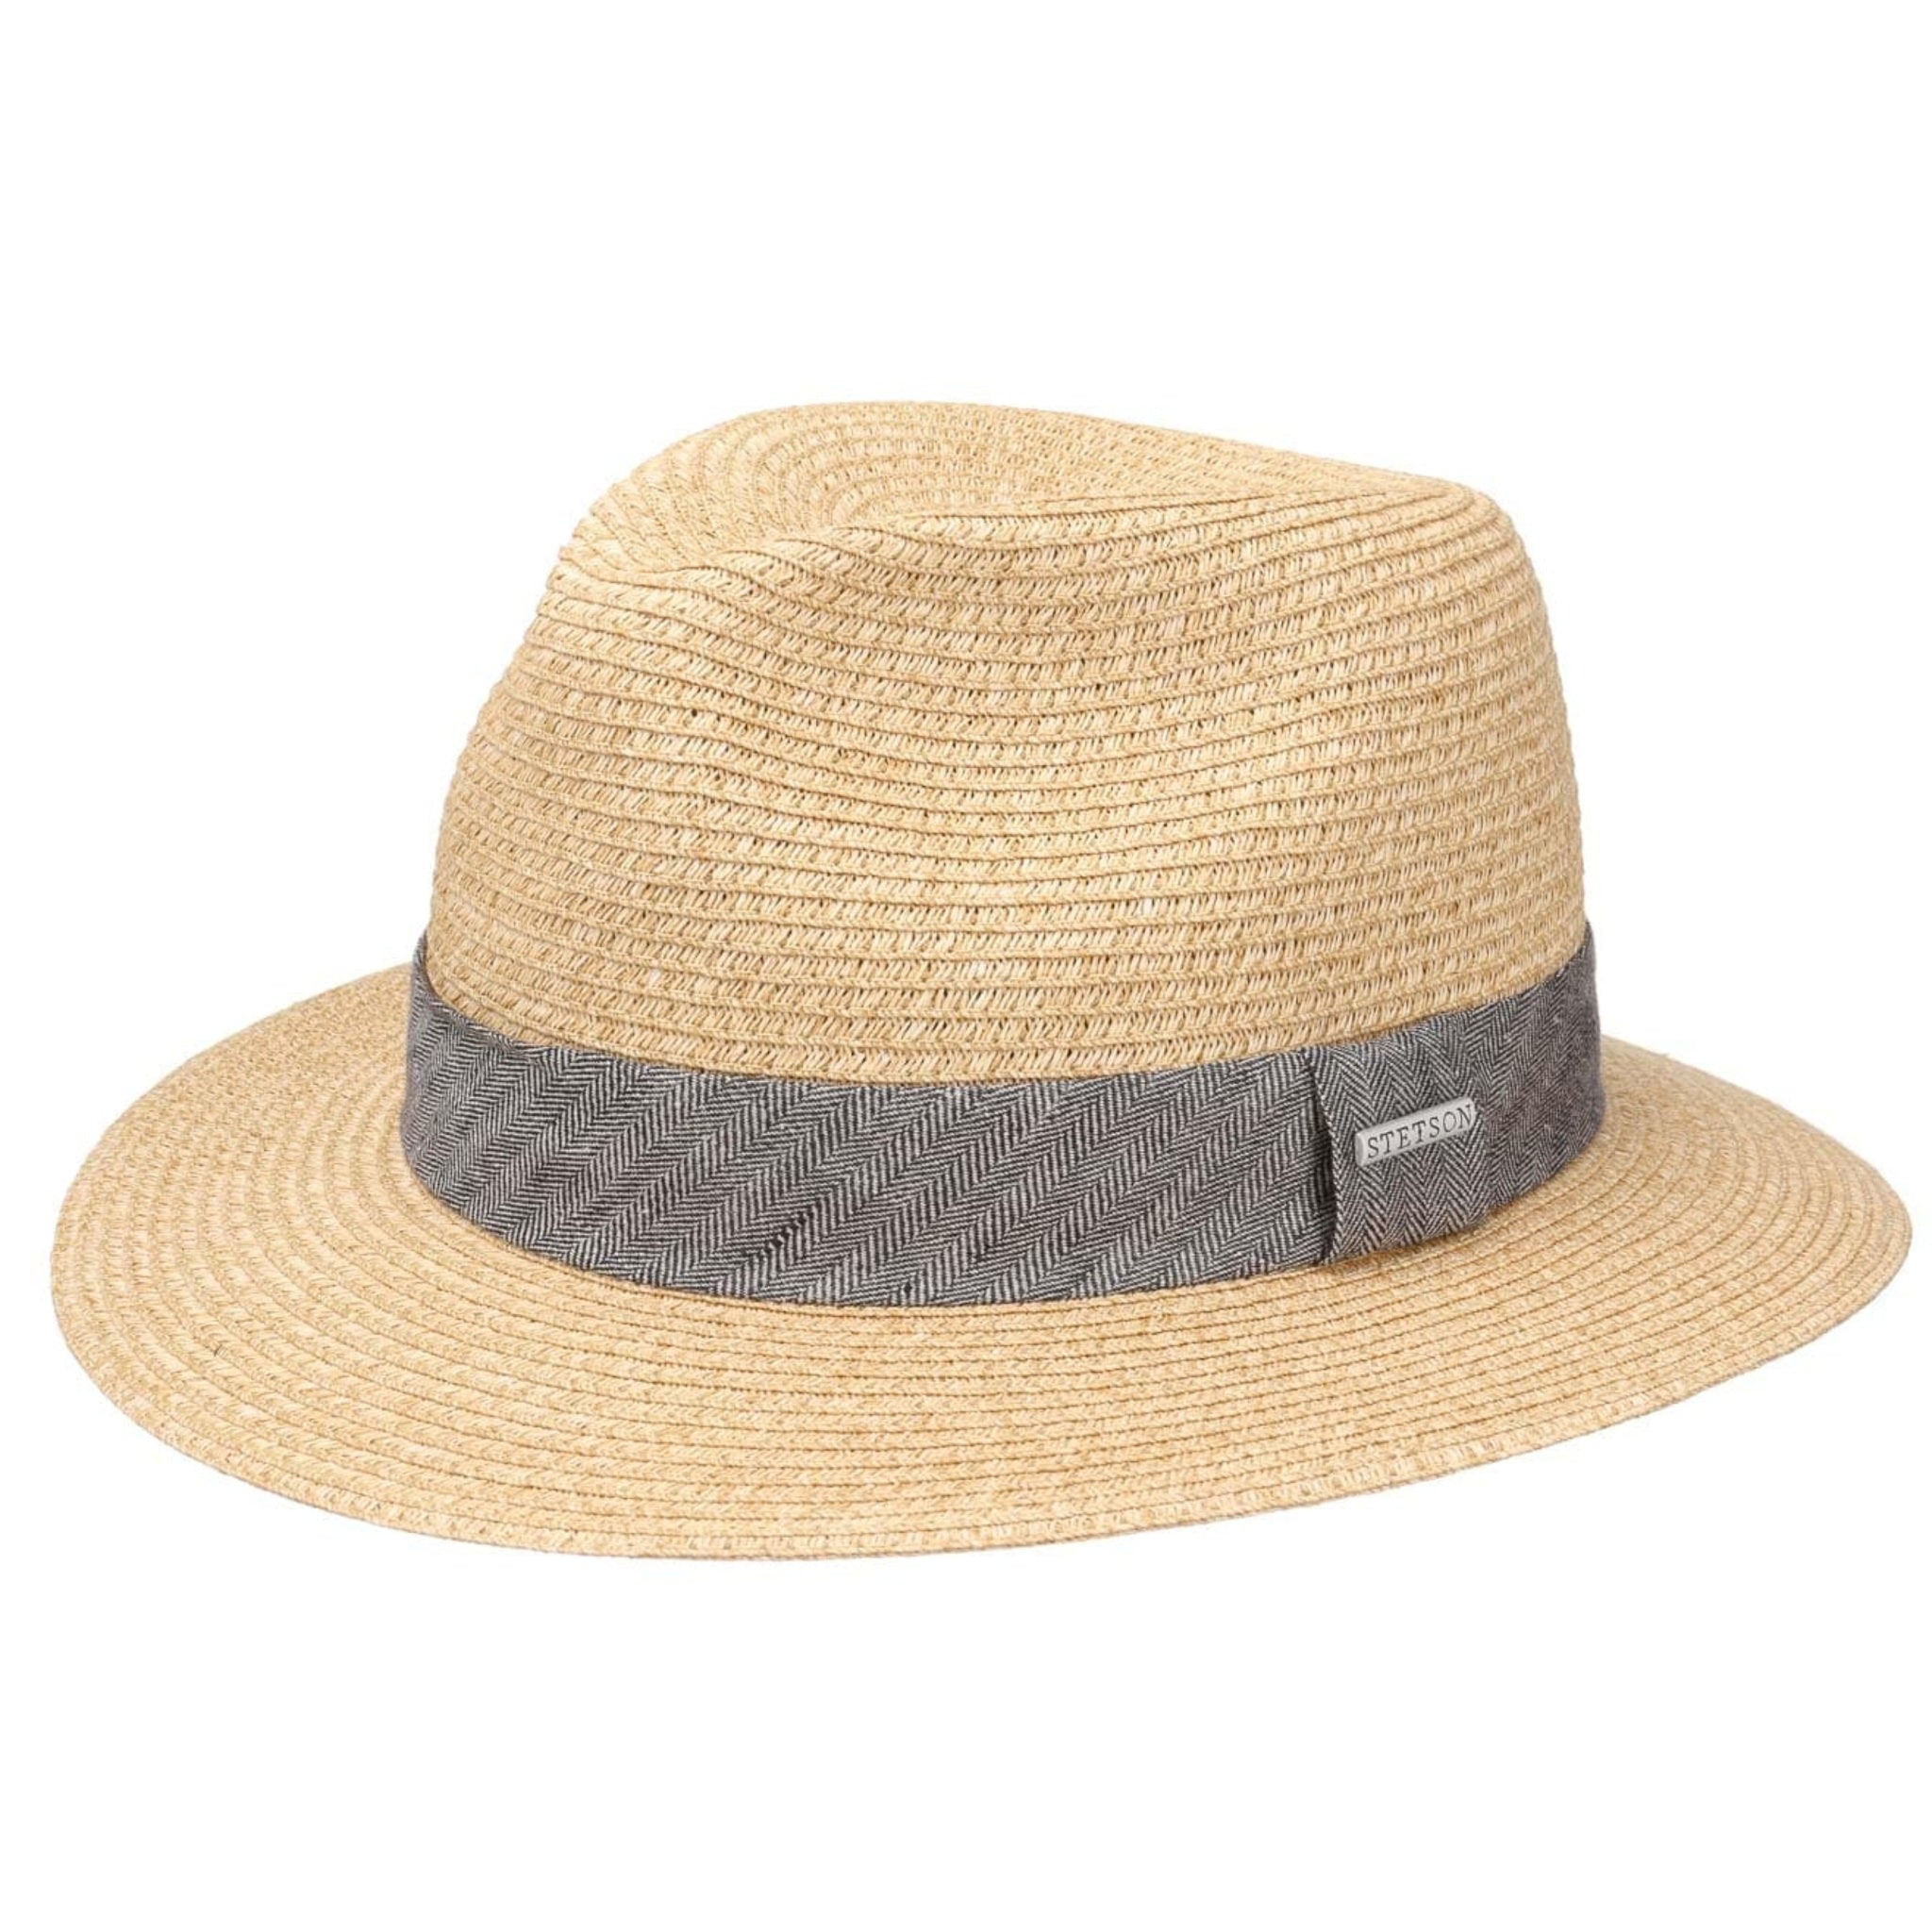 The Hat Shop Stetson Toyo Traveller Panama Hat